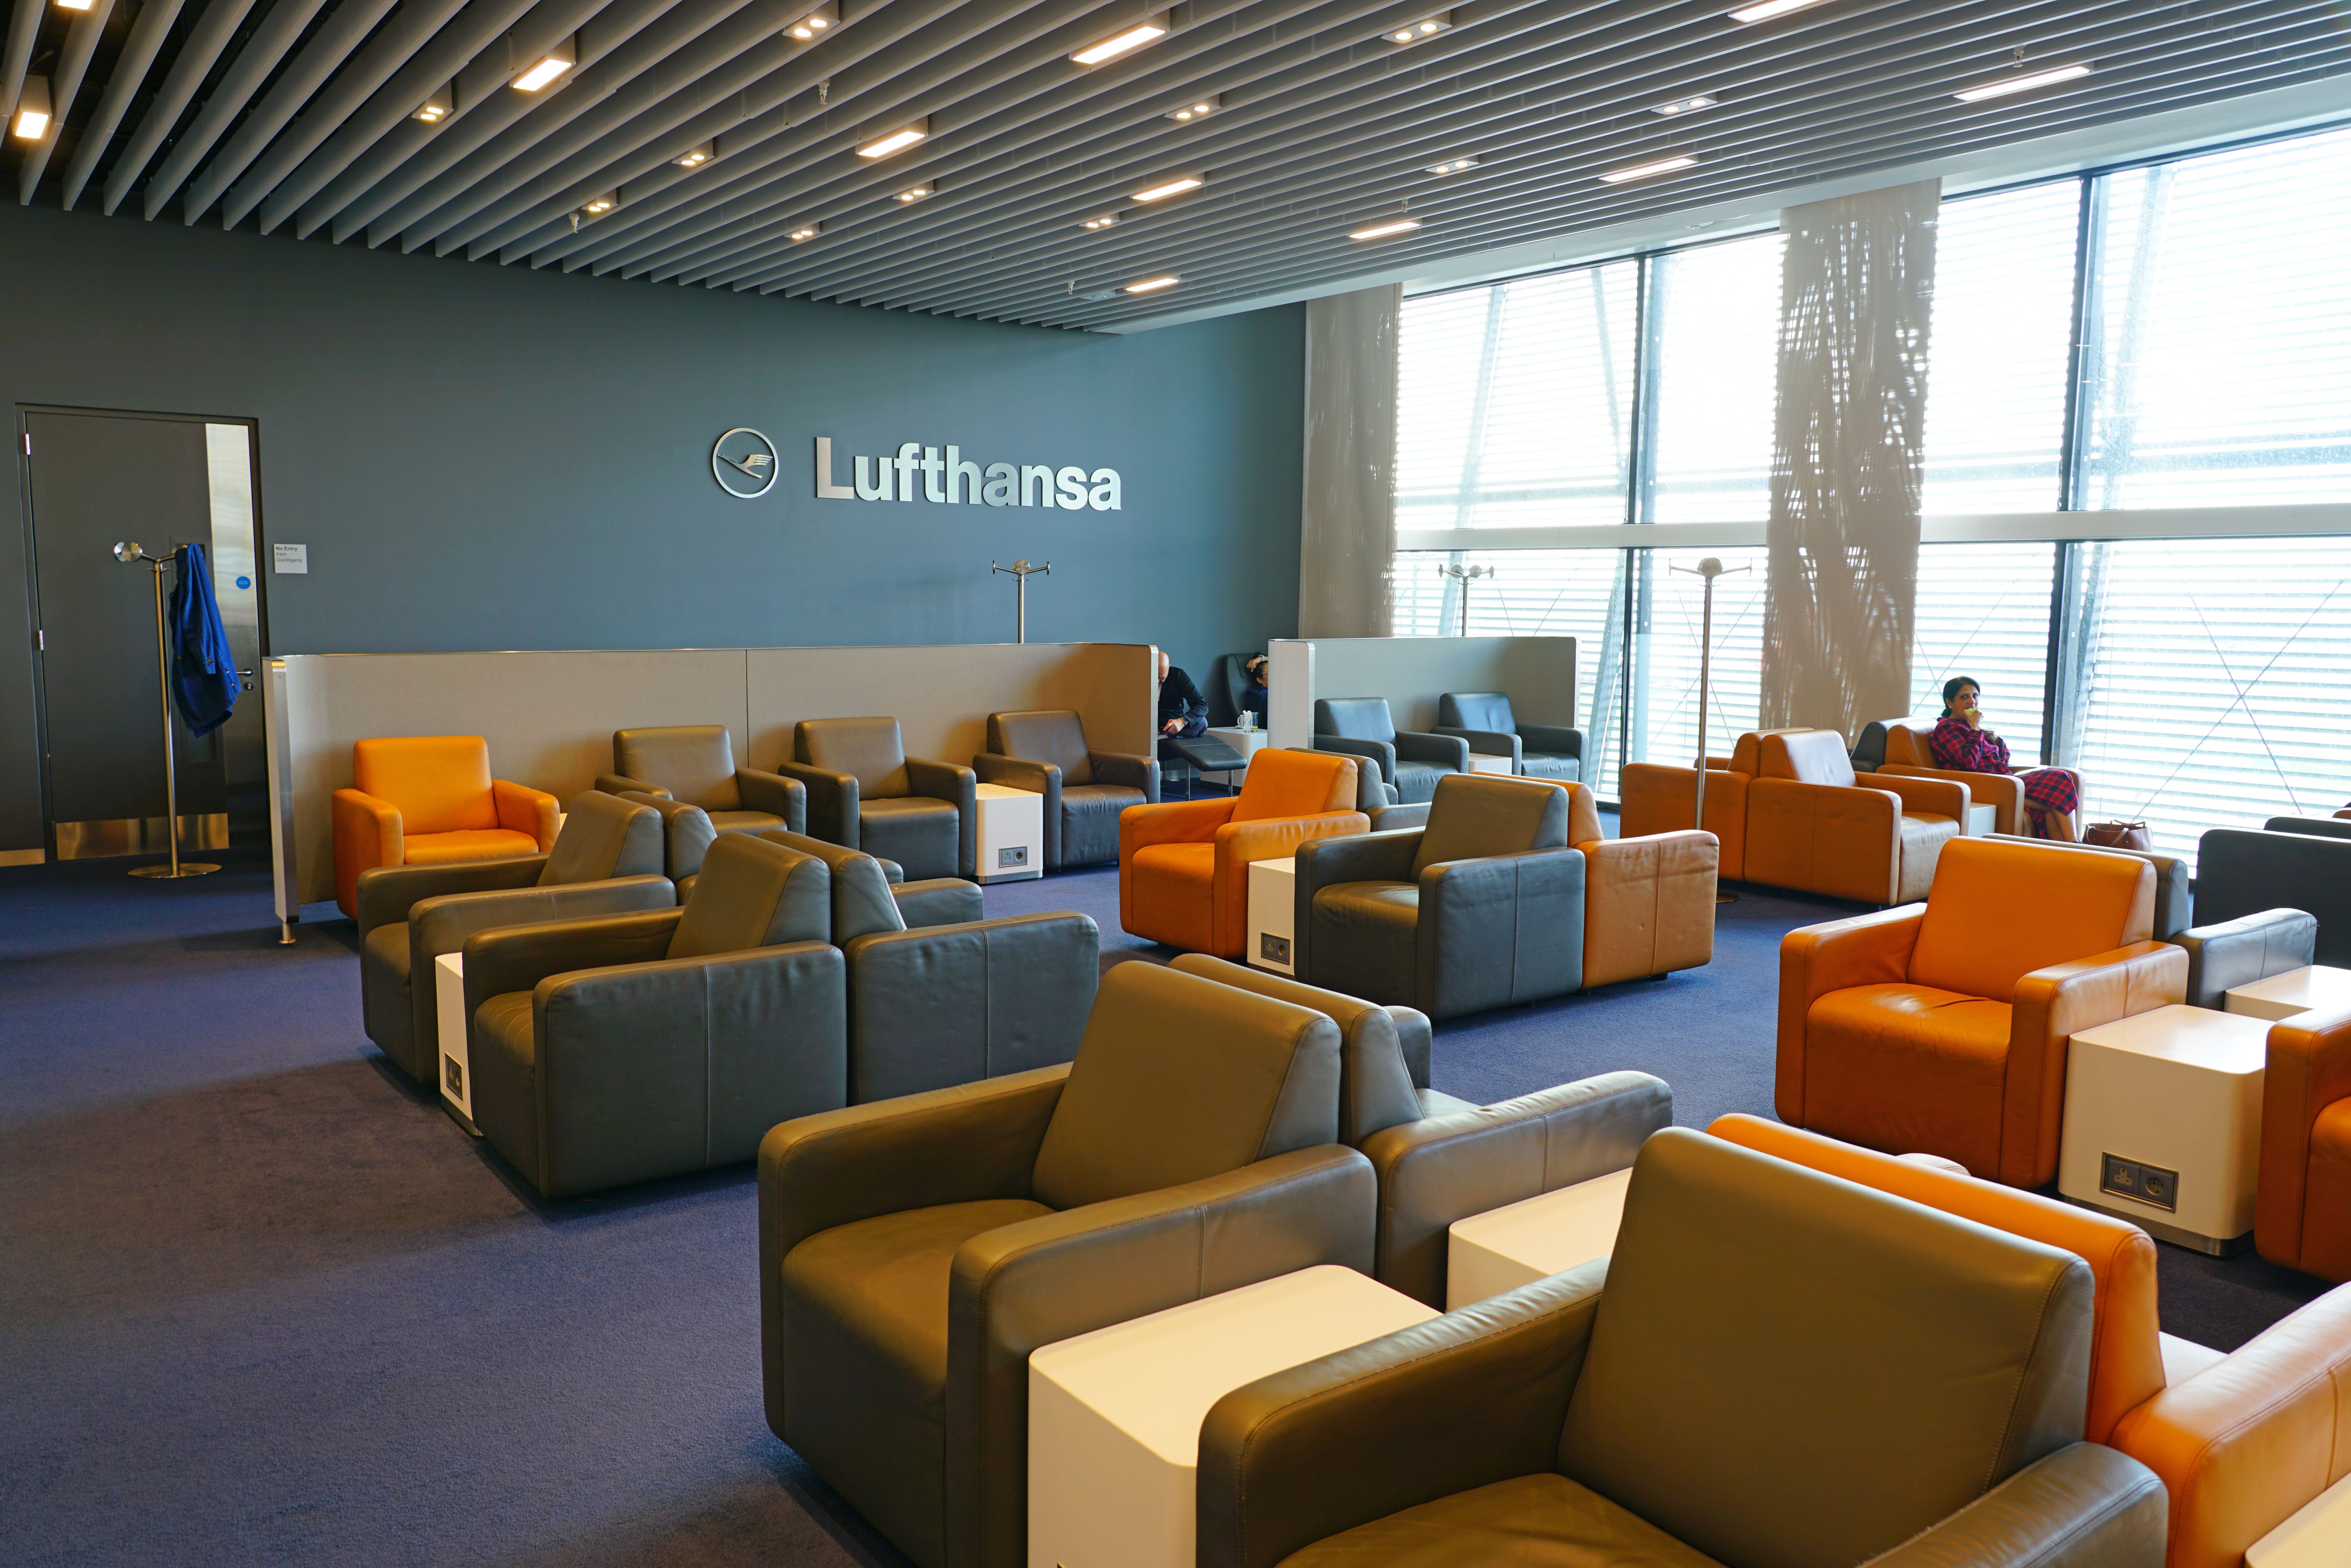 Lufthansa business class lounge